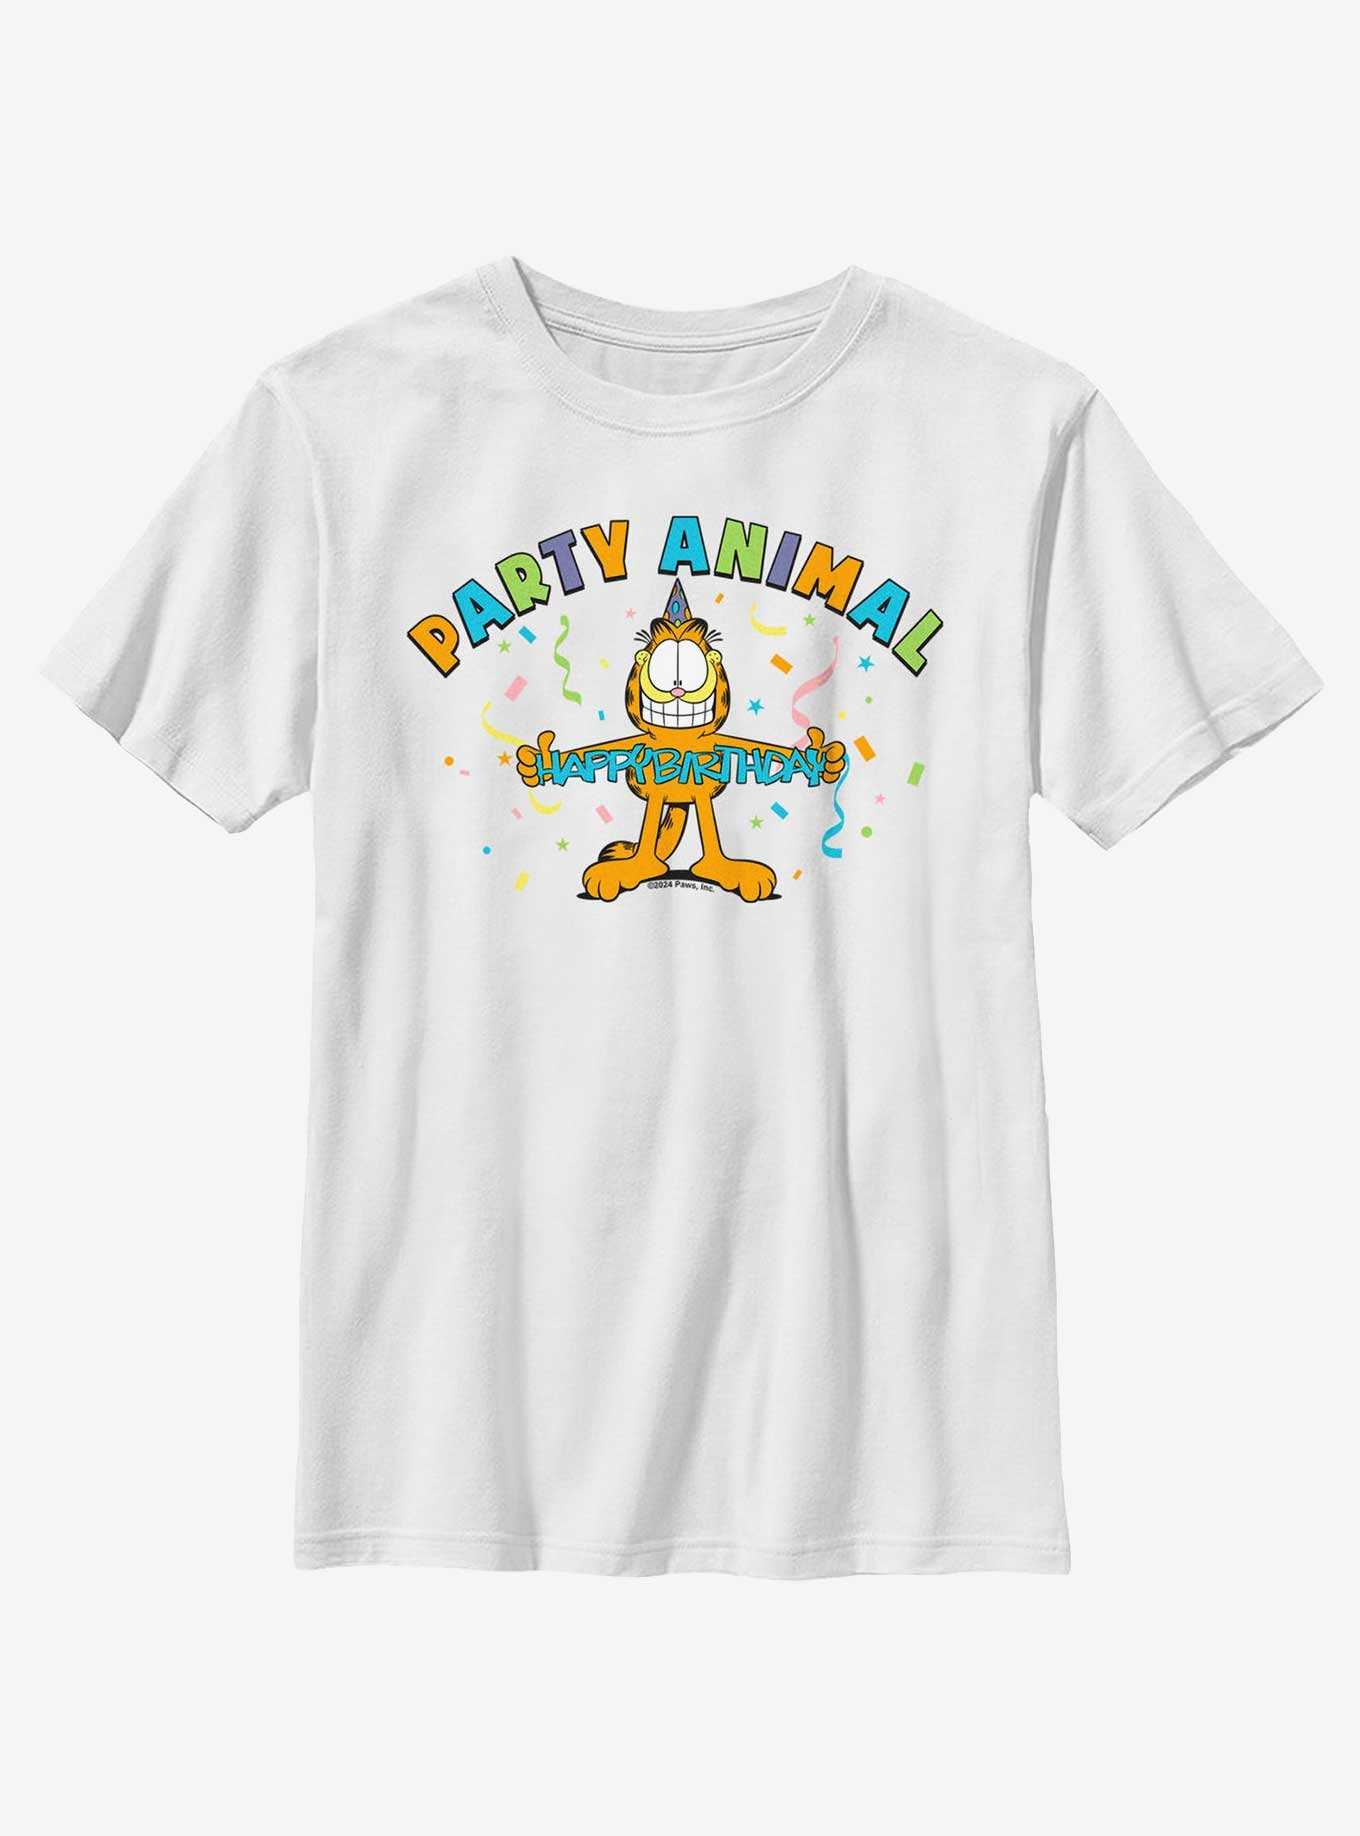 Garfield Birthday Party Animal Youth T-Shirt, , hi-res